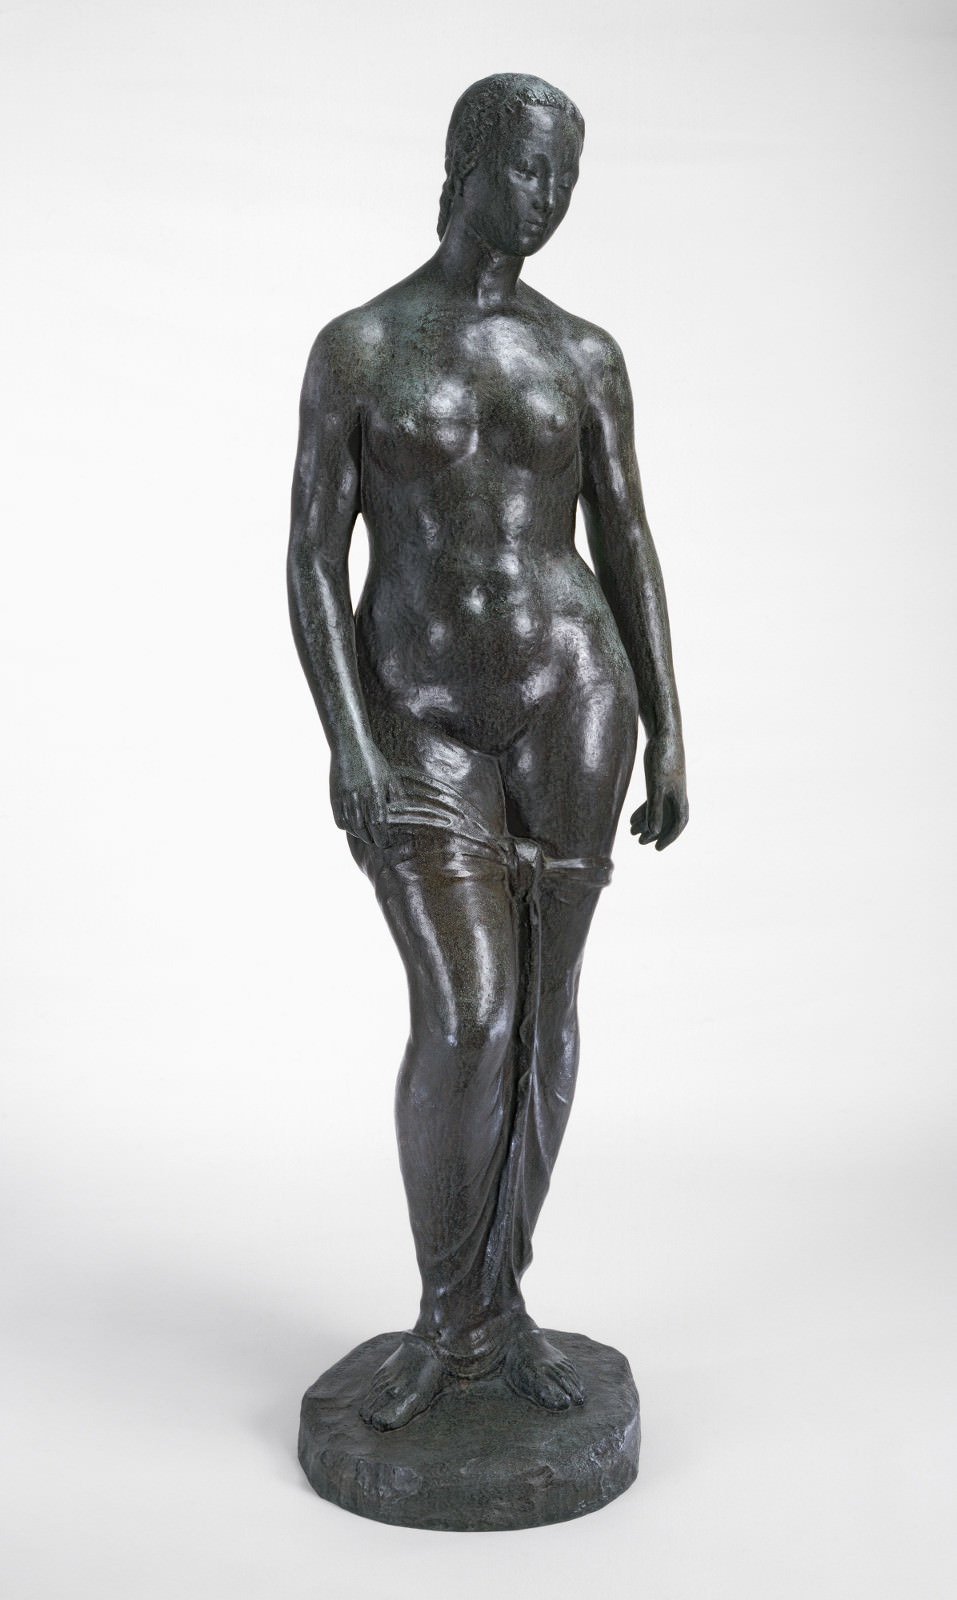 Fig. 3 – Mulher em Pé, Wilhelm Lehmbruck, 1910, bronze, 191.2 x 54 x 39.9 cm. National Gallery of Art, Washington. Fundo Ailsa Mellon Bruce.